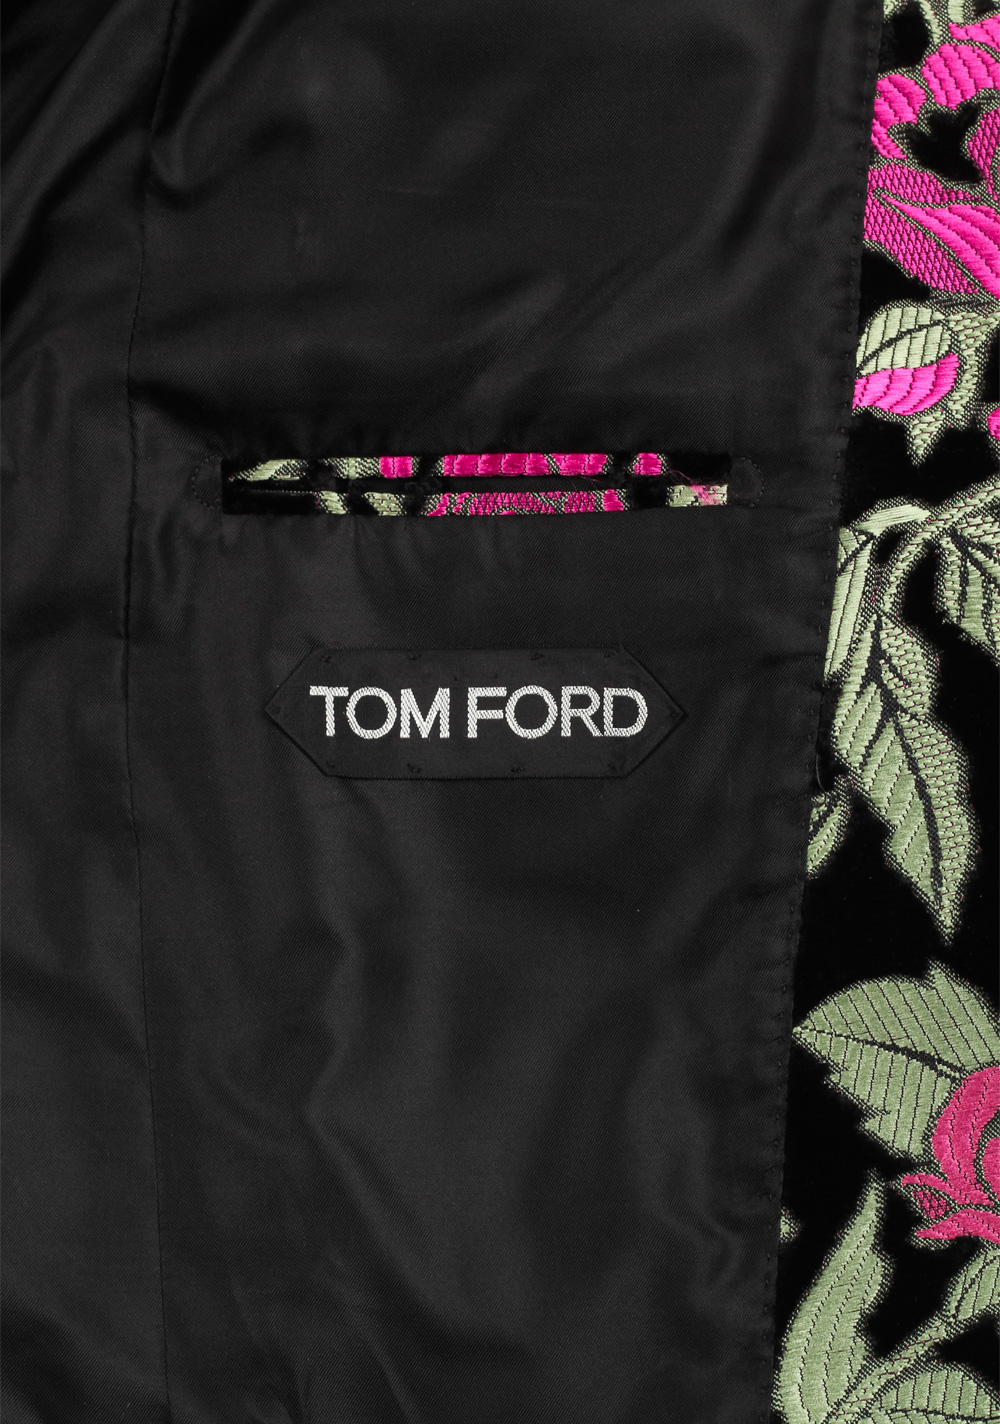 TOM FORD Atticus Black / Green / Pink Tuxedo Dinner Jacket Size 46 / 36R U.S. | Costume Limité